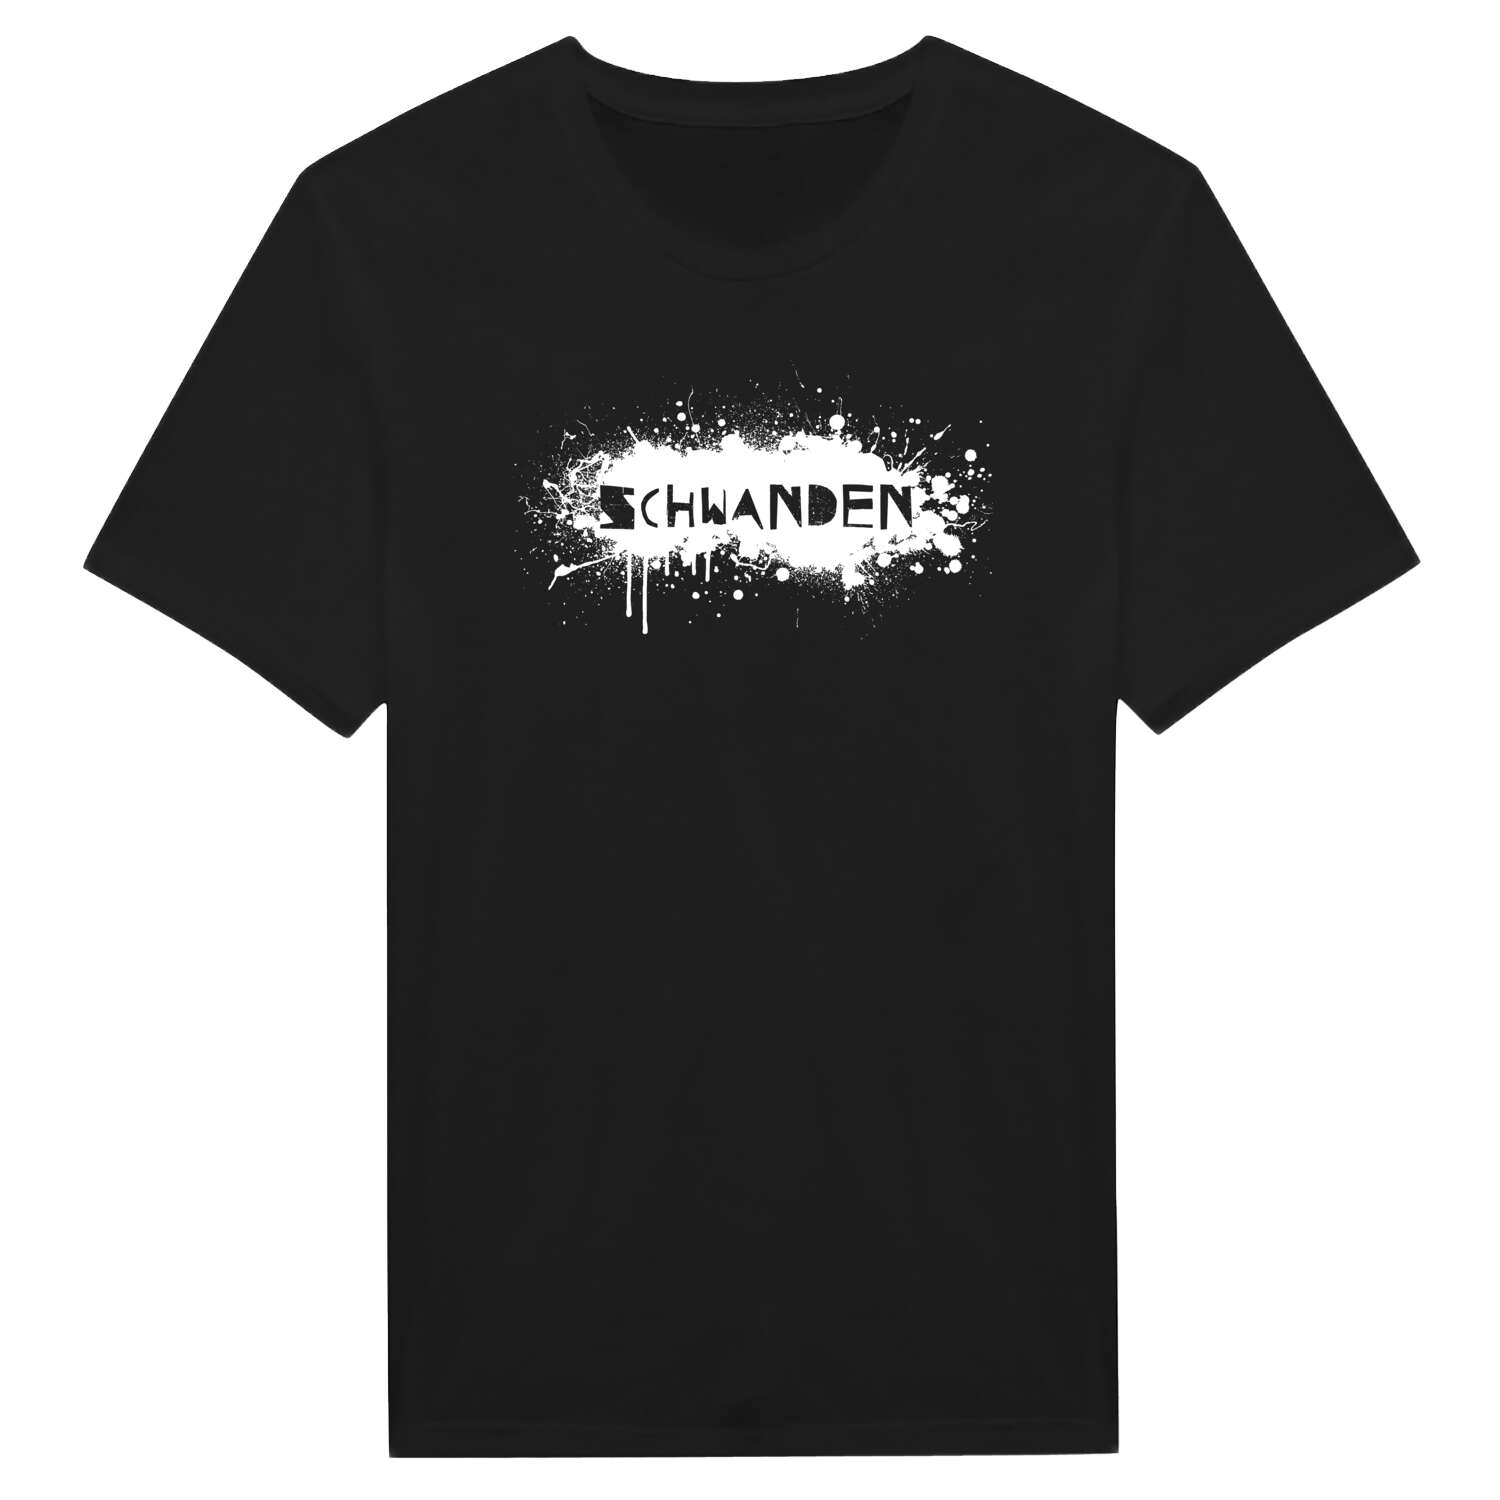 Schwanden T-Shirt »Paint Splash Punk«